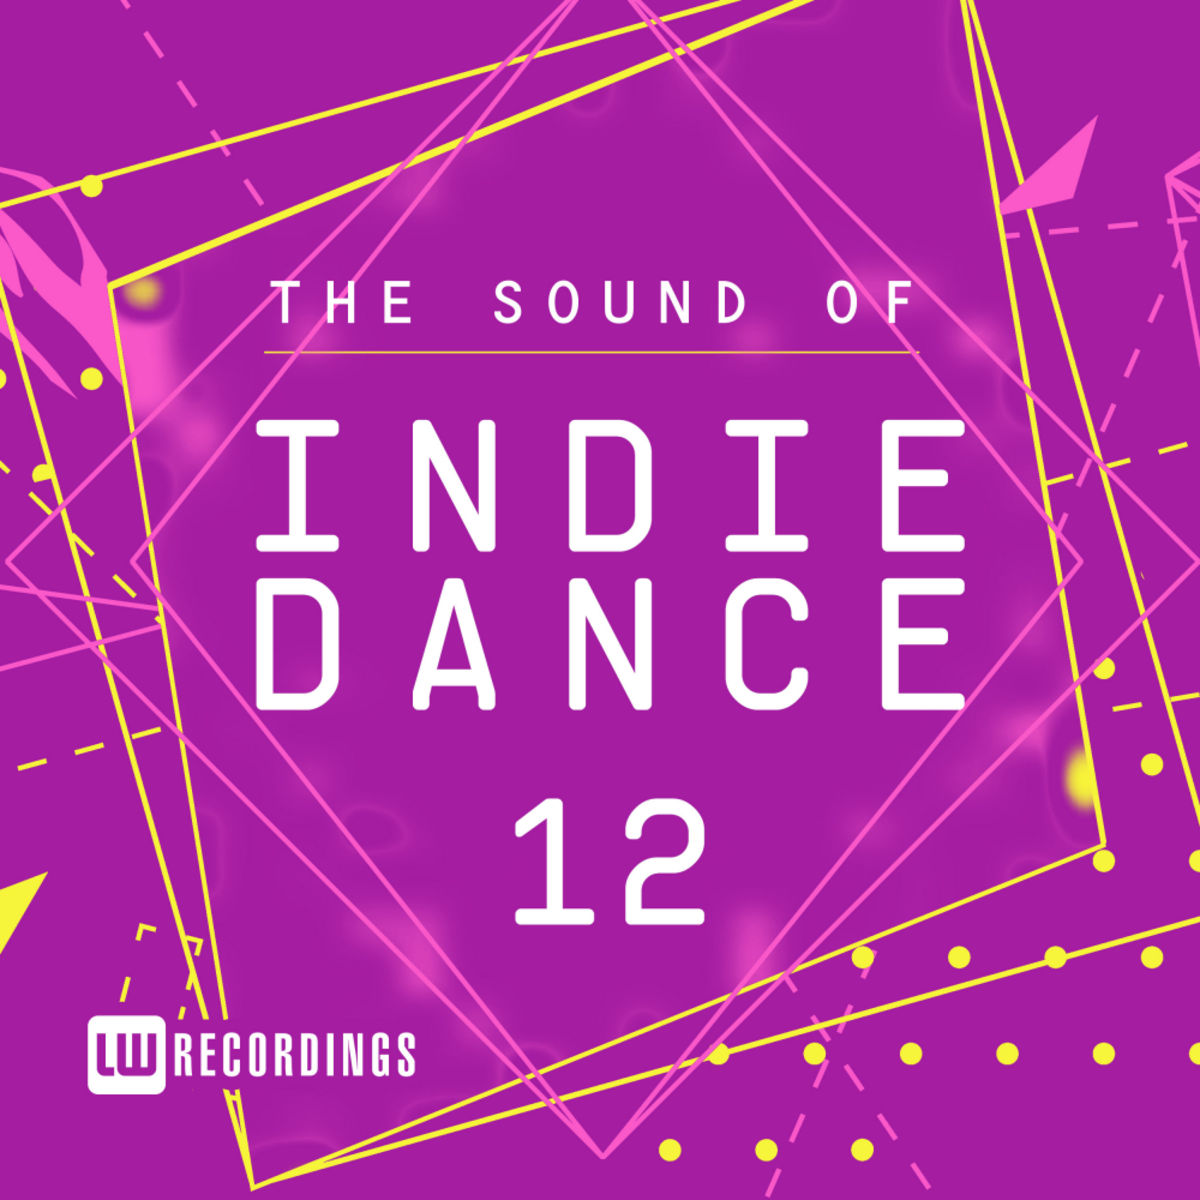 VA - The Sound Of Indie Dance, Vol. 12 / LW Recordings